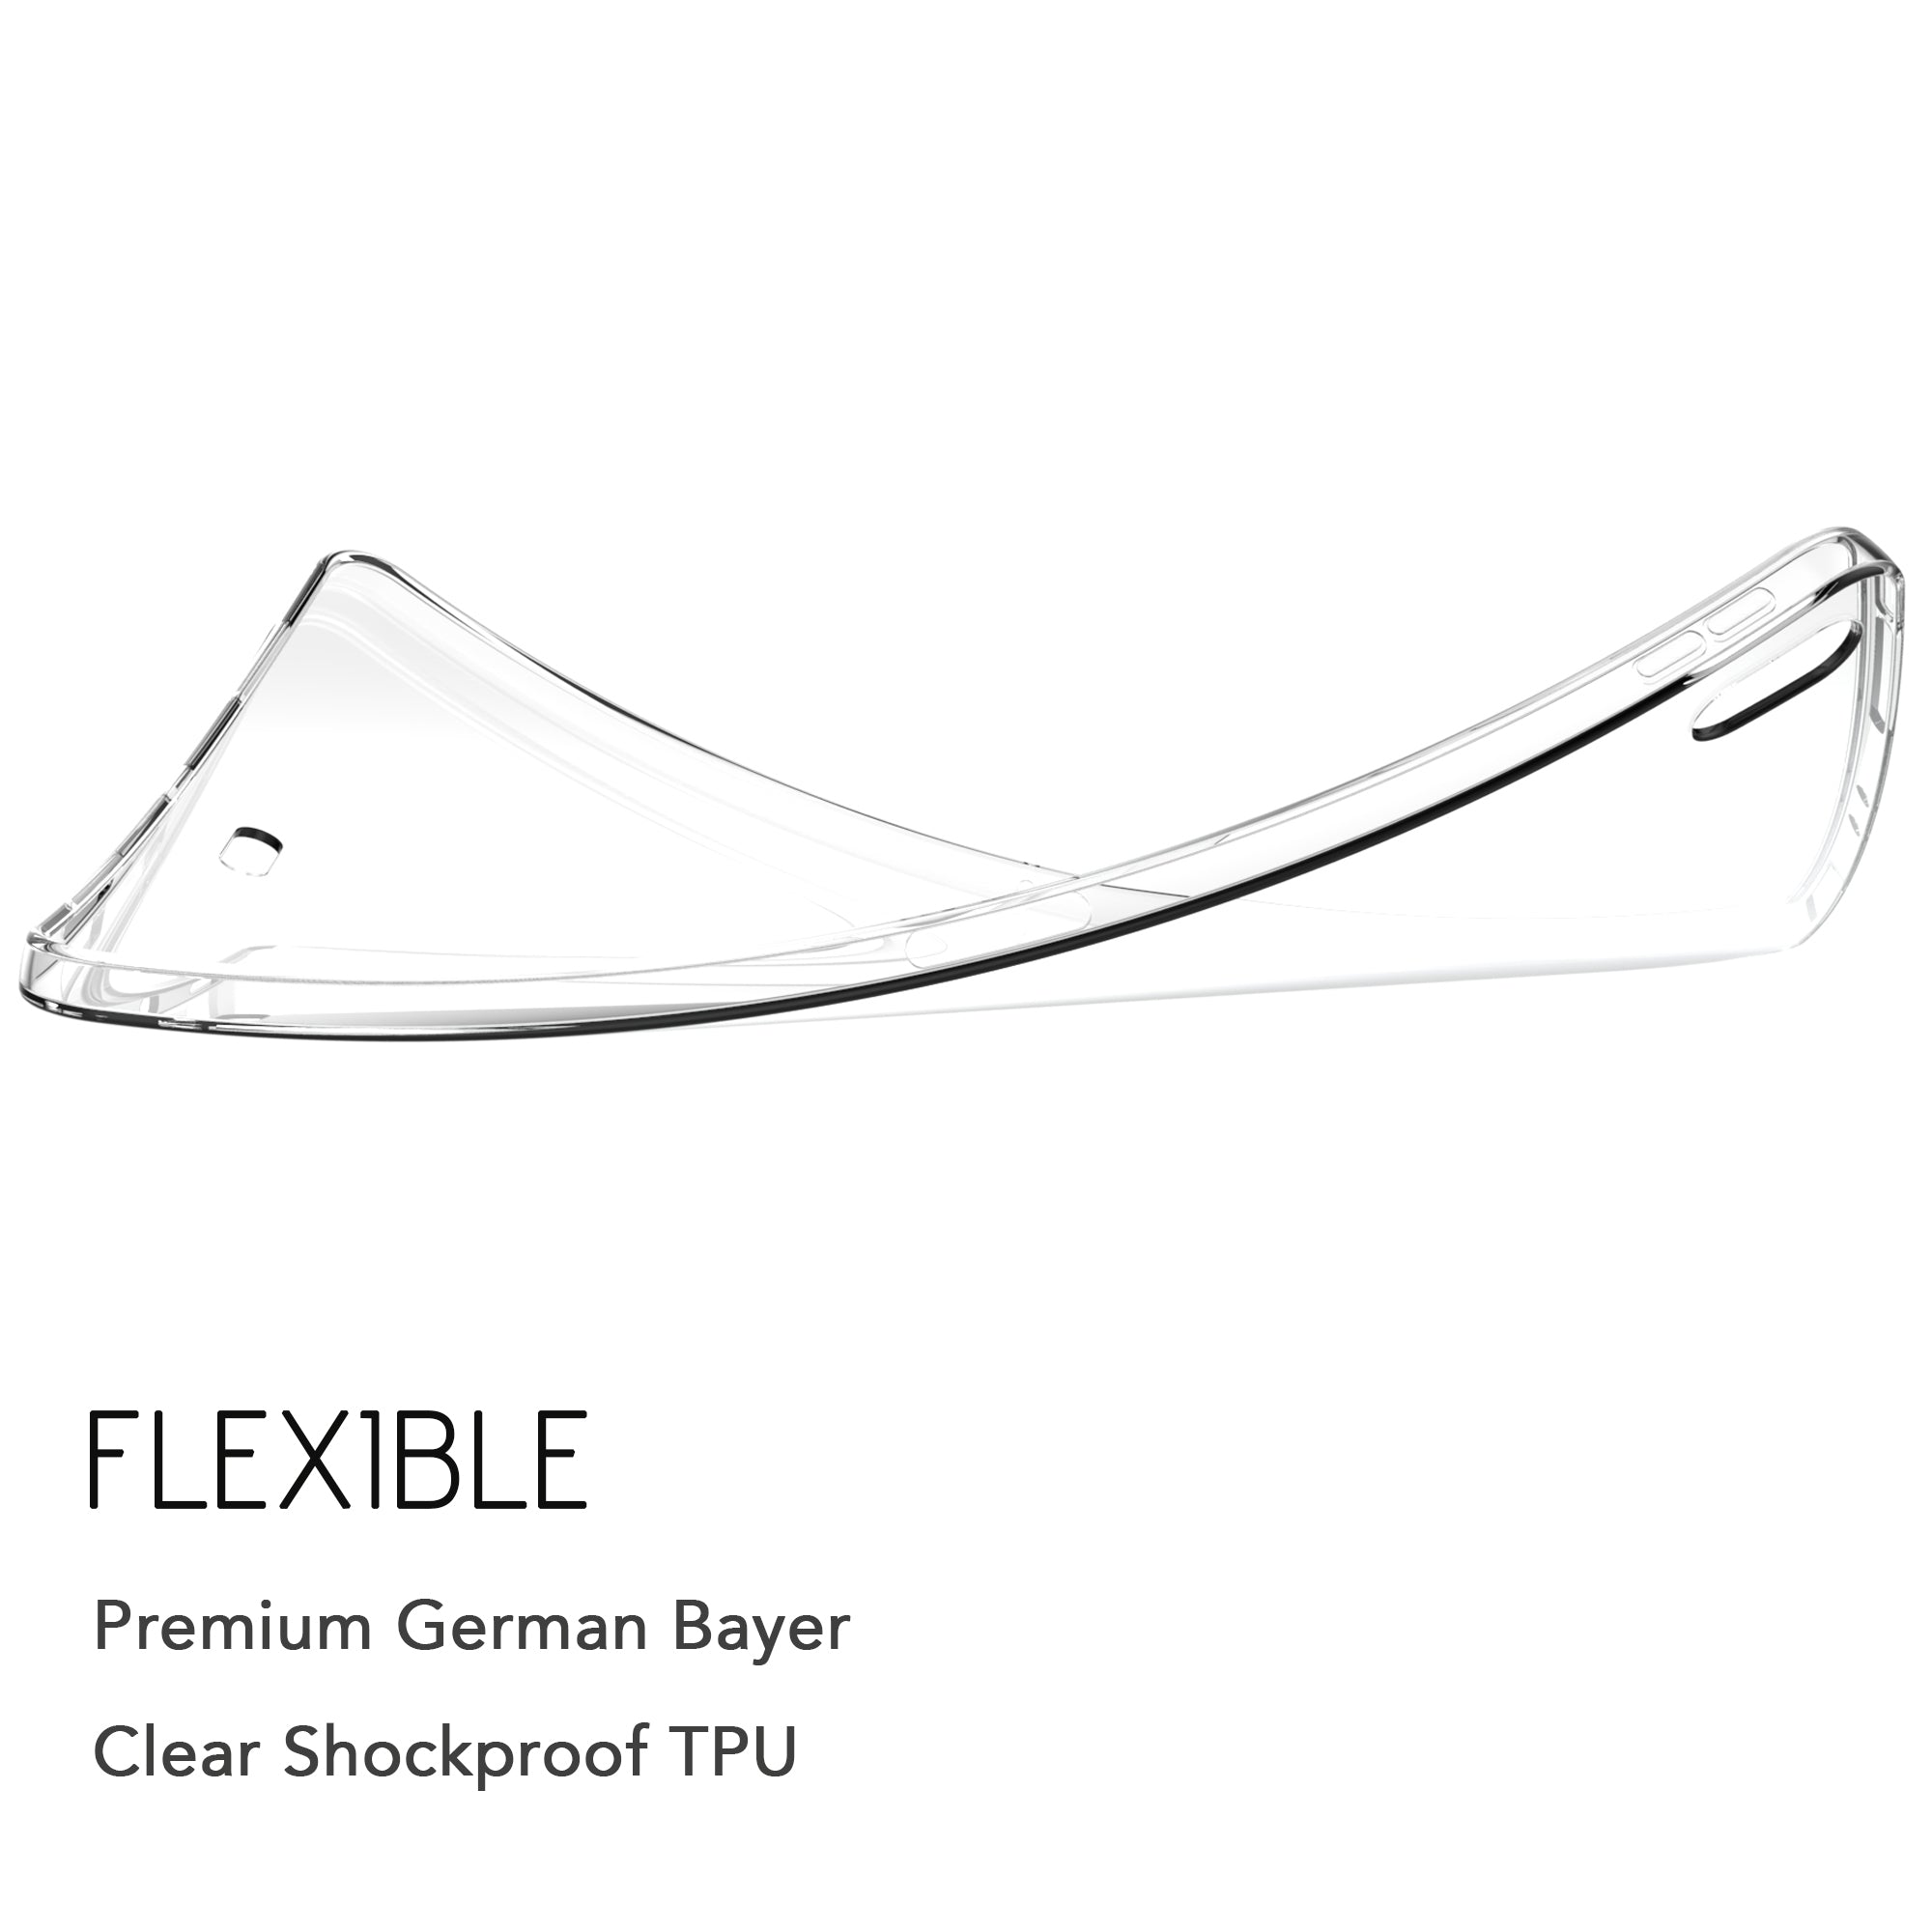 Luvvitt iPad Pro 11 Case CLARITY Flexible TPU Slim Light Back Cover 2018